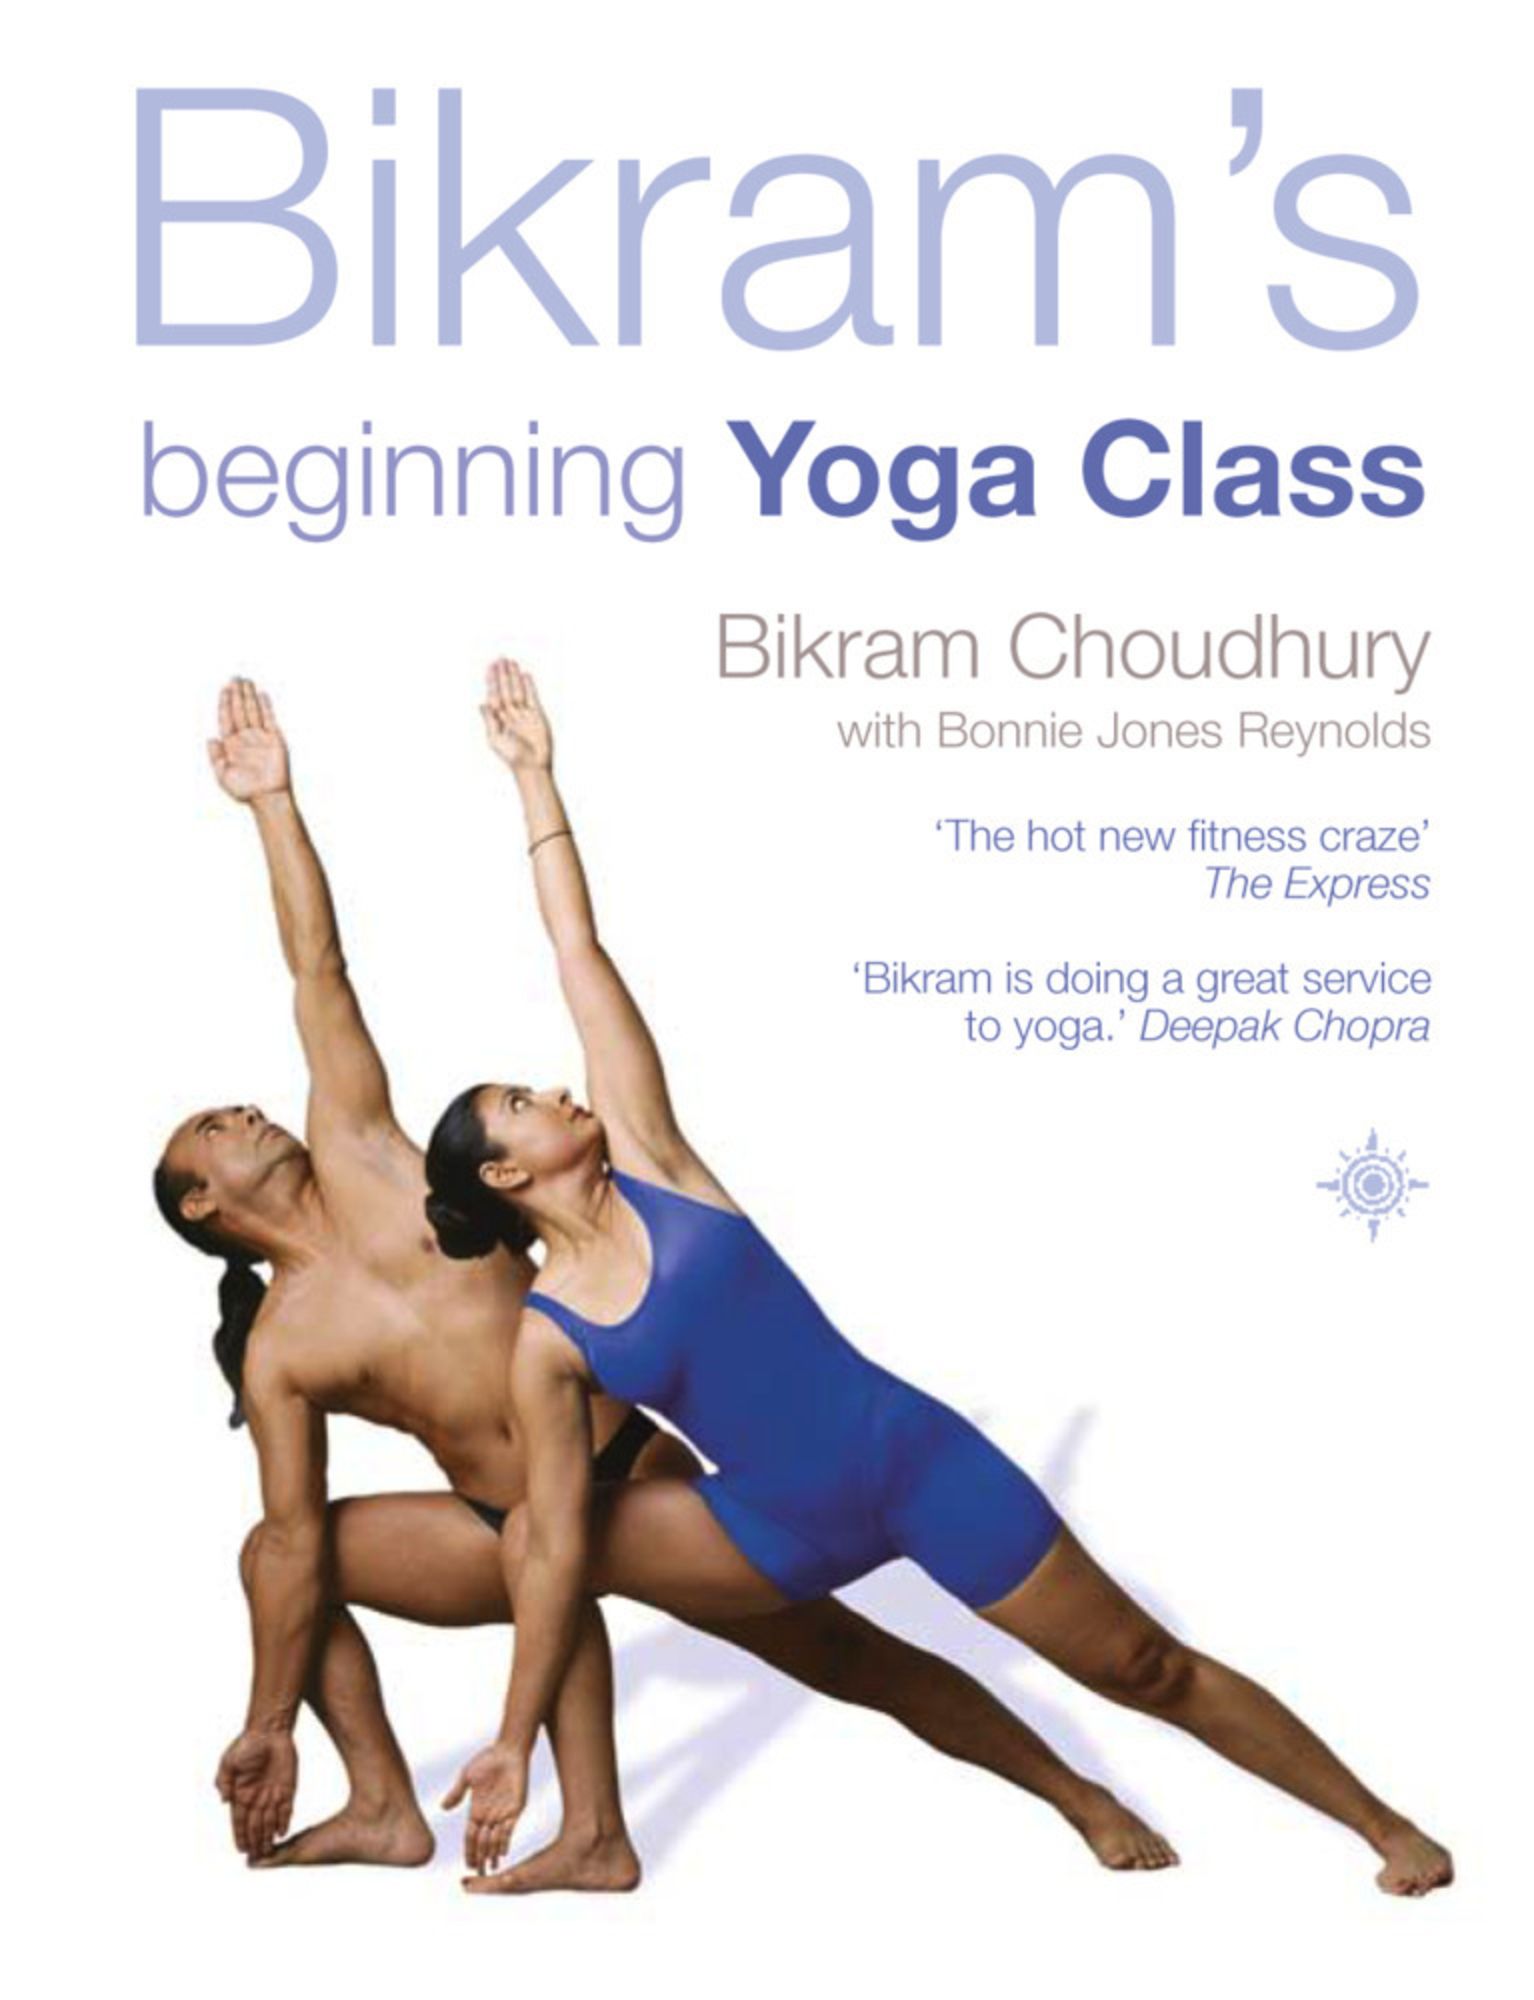 Bikram Choudhury founder of Bikram Yoga and his student ac… | Flickr